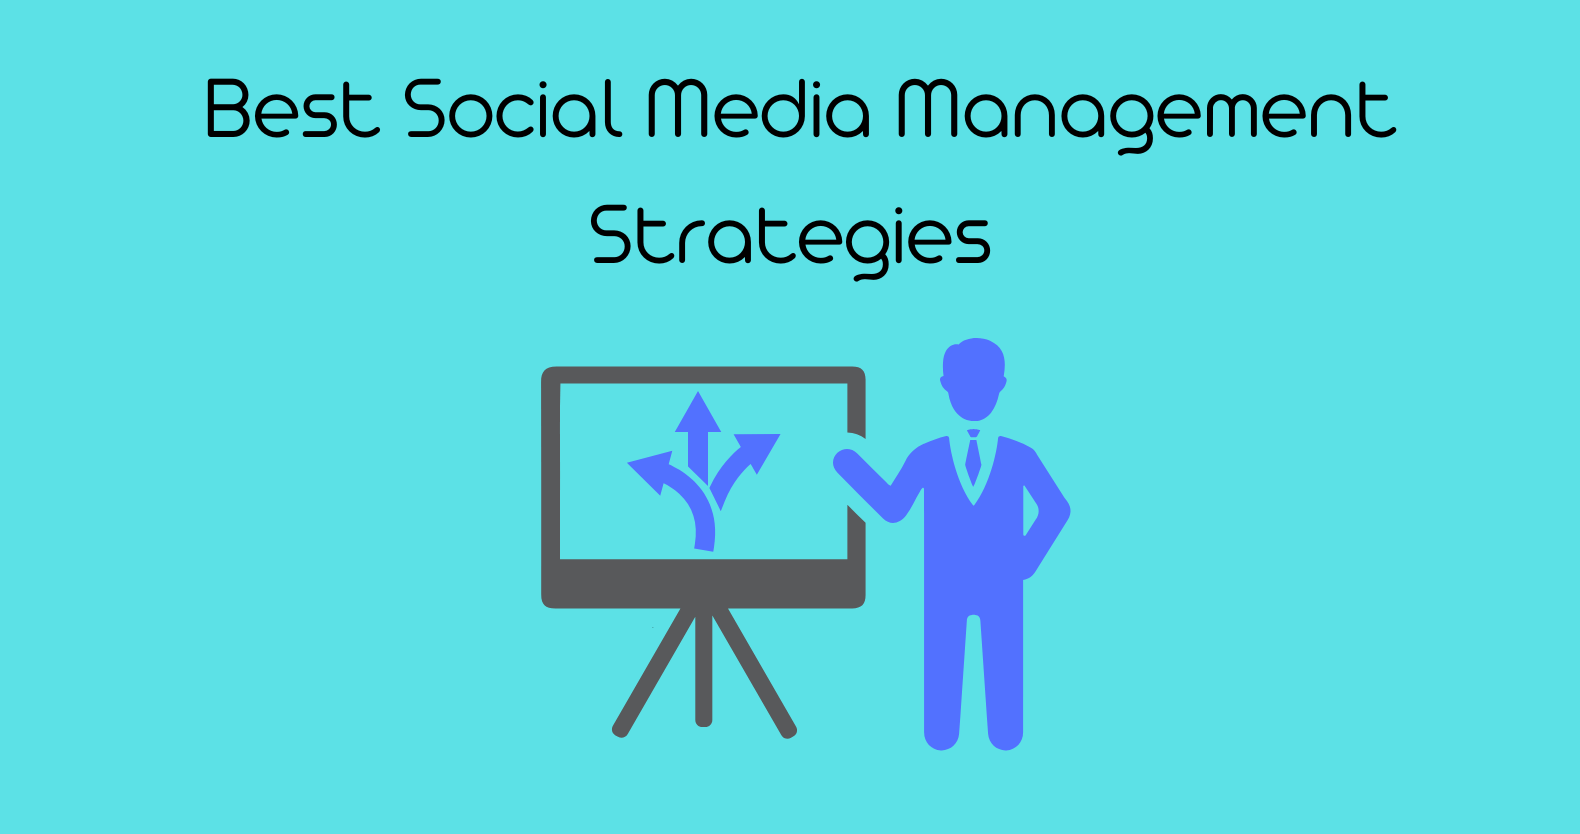 _Best Social Media Management Strategies